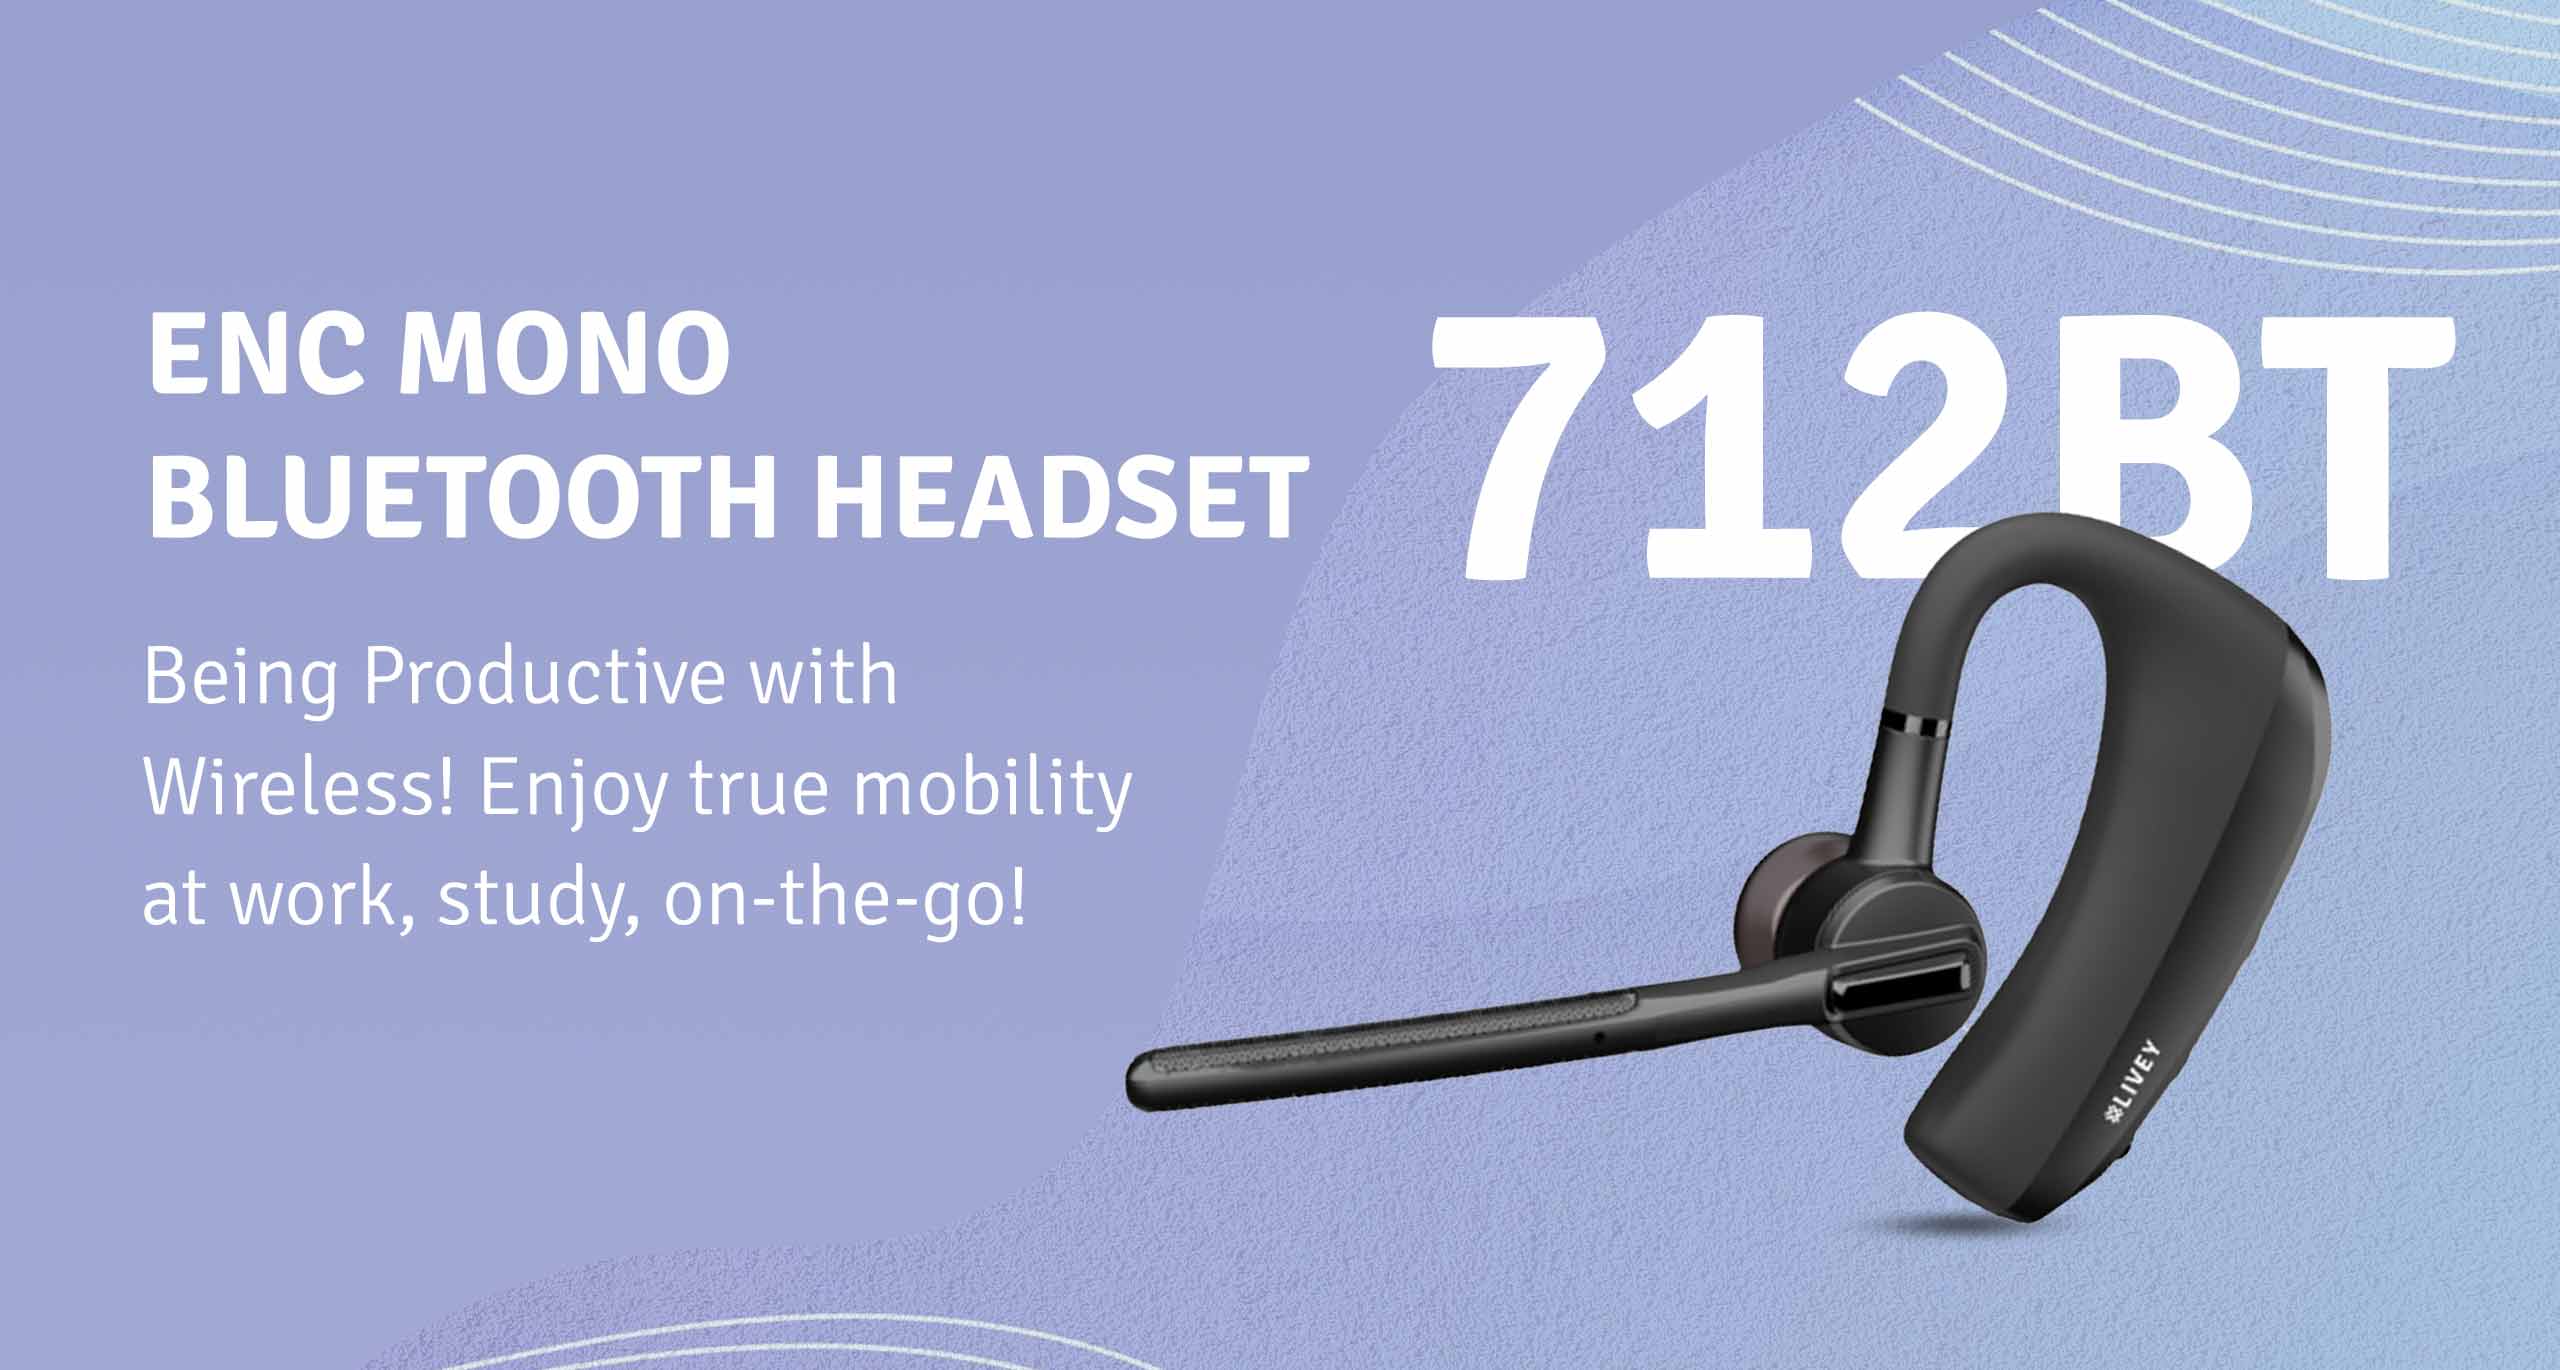 LIVEY 712BT Series Headset, ENC Mono Bluetooth Headset